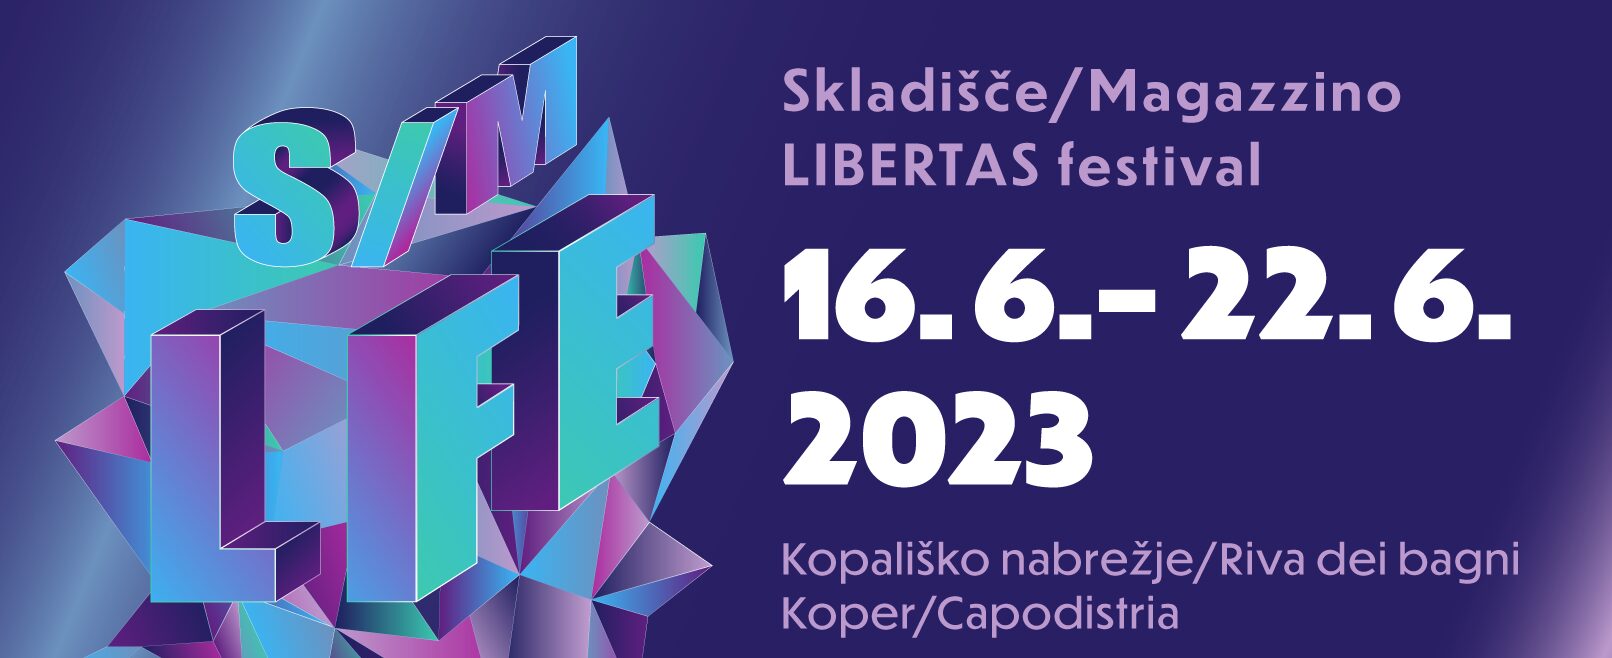 V Libertas se vrača tretji festival (S/M LiFe)